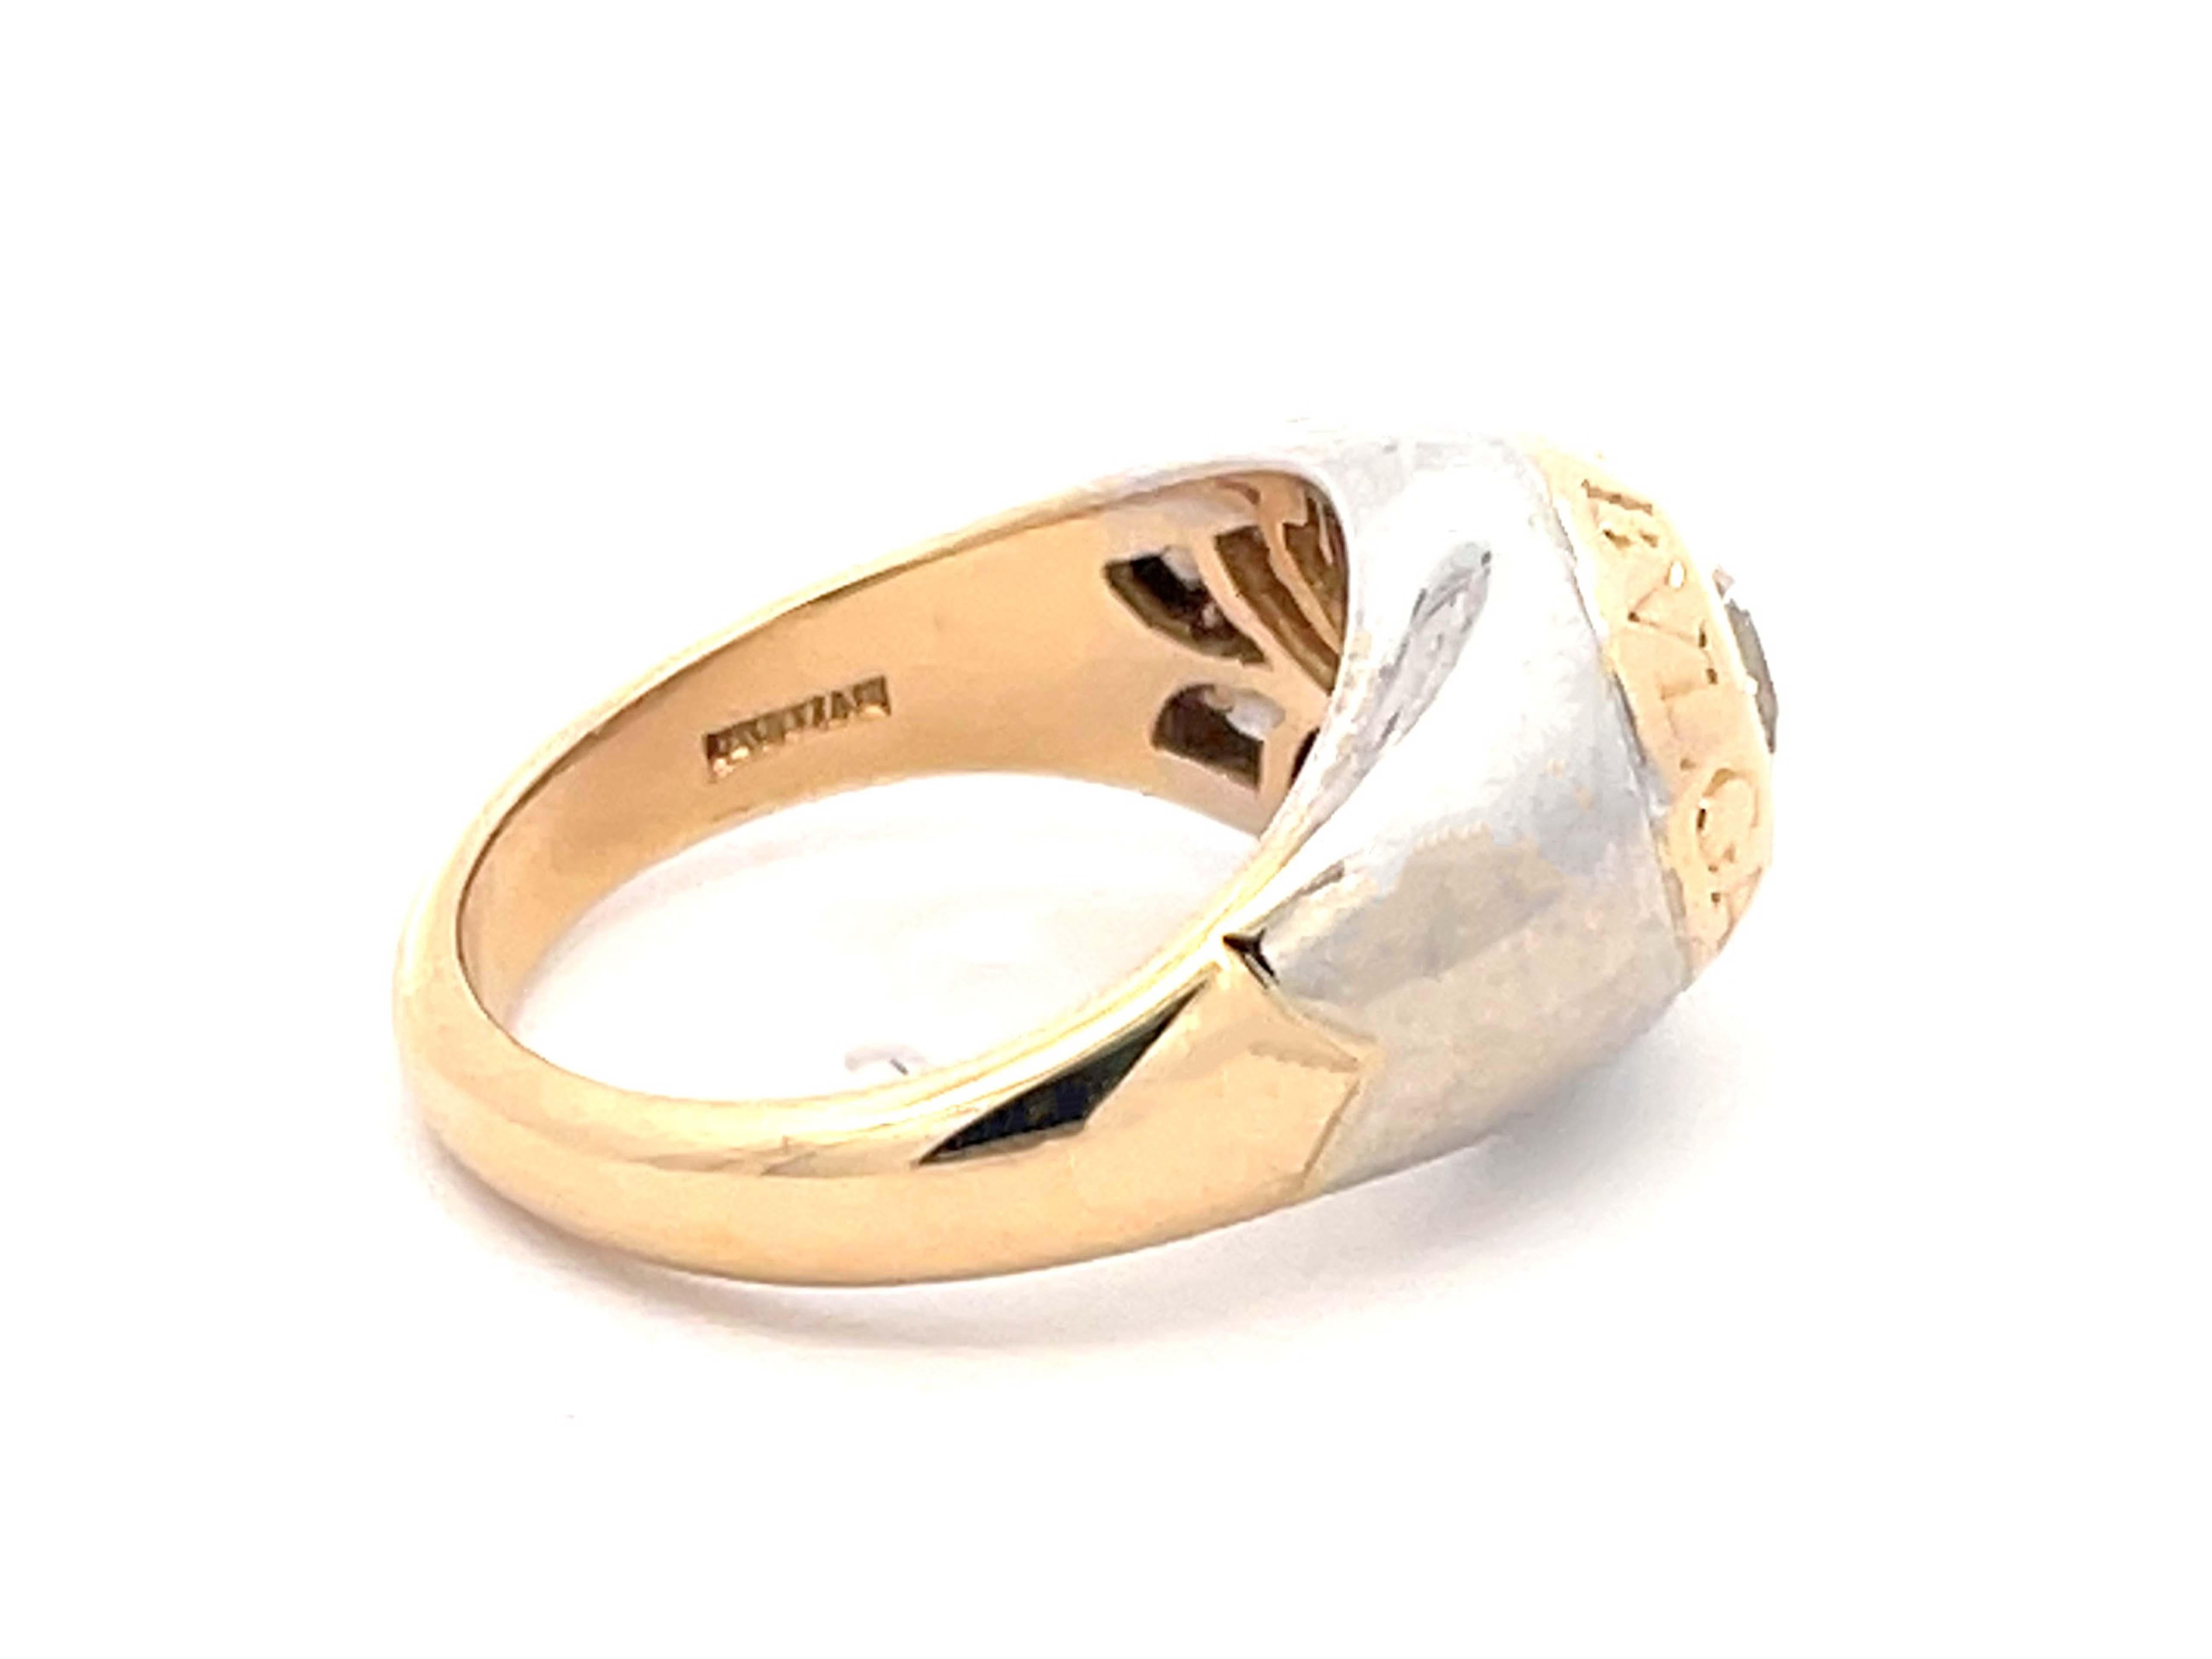 Brilliant Cut Bvlgari Bvlgari Diamond Ring in 18k White and Yellow Gold For Sale